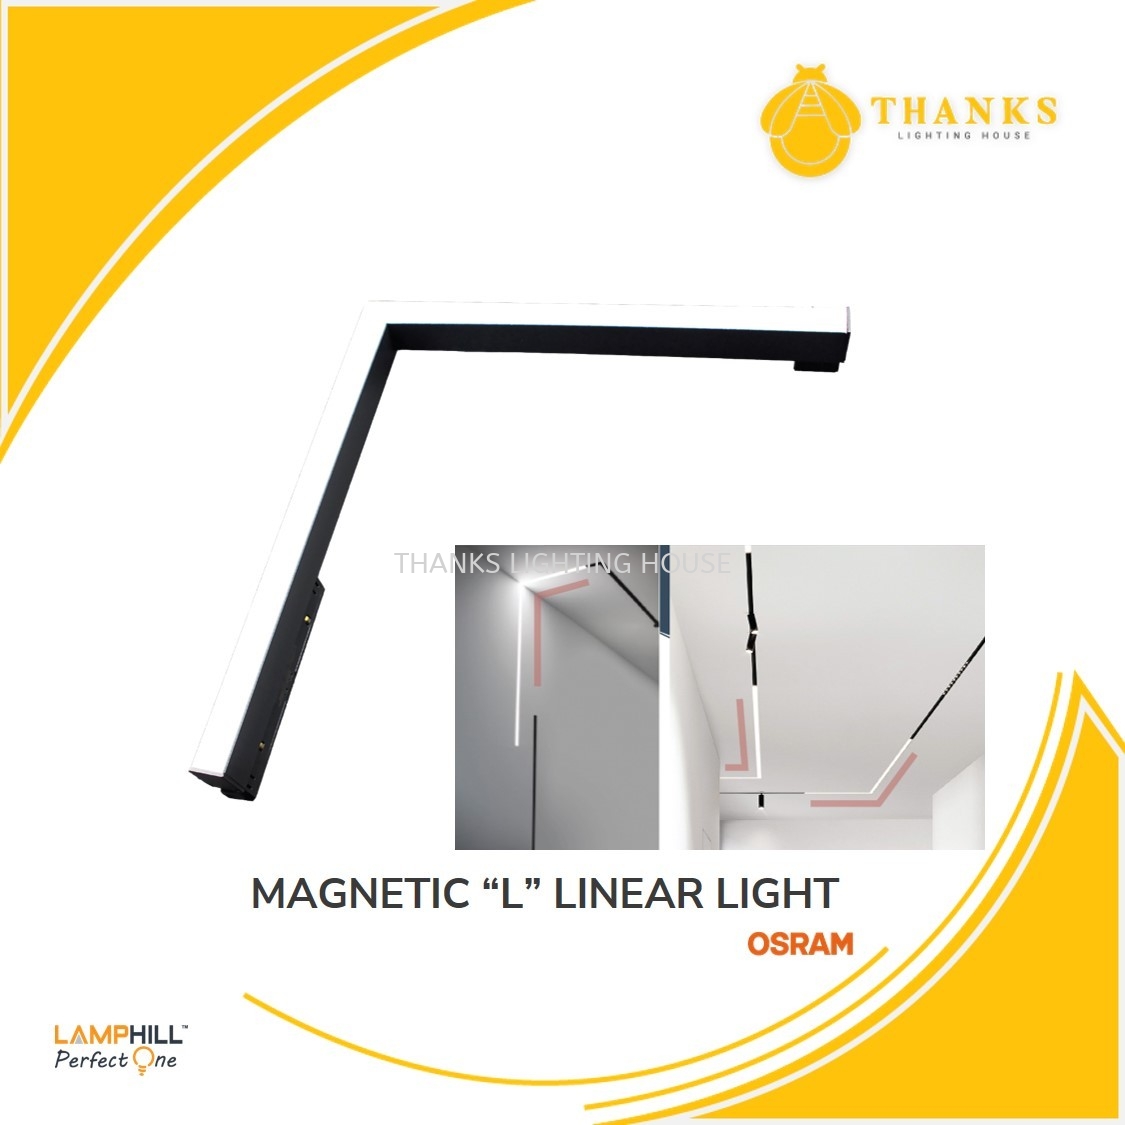 Magnetic LED "L" Linear Light